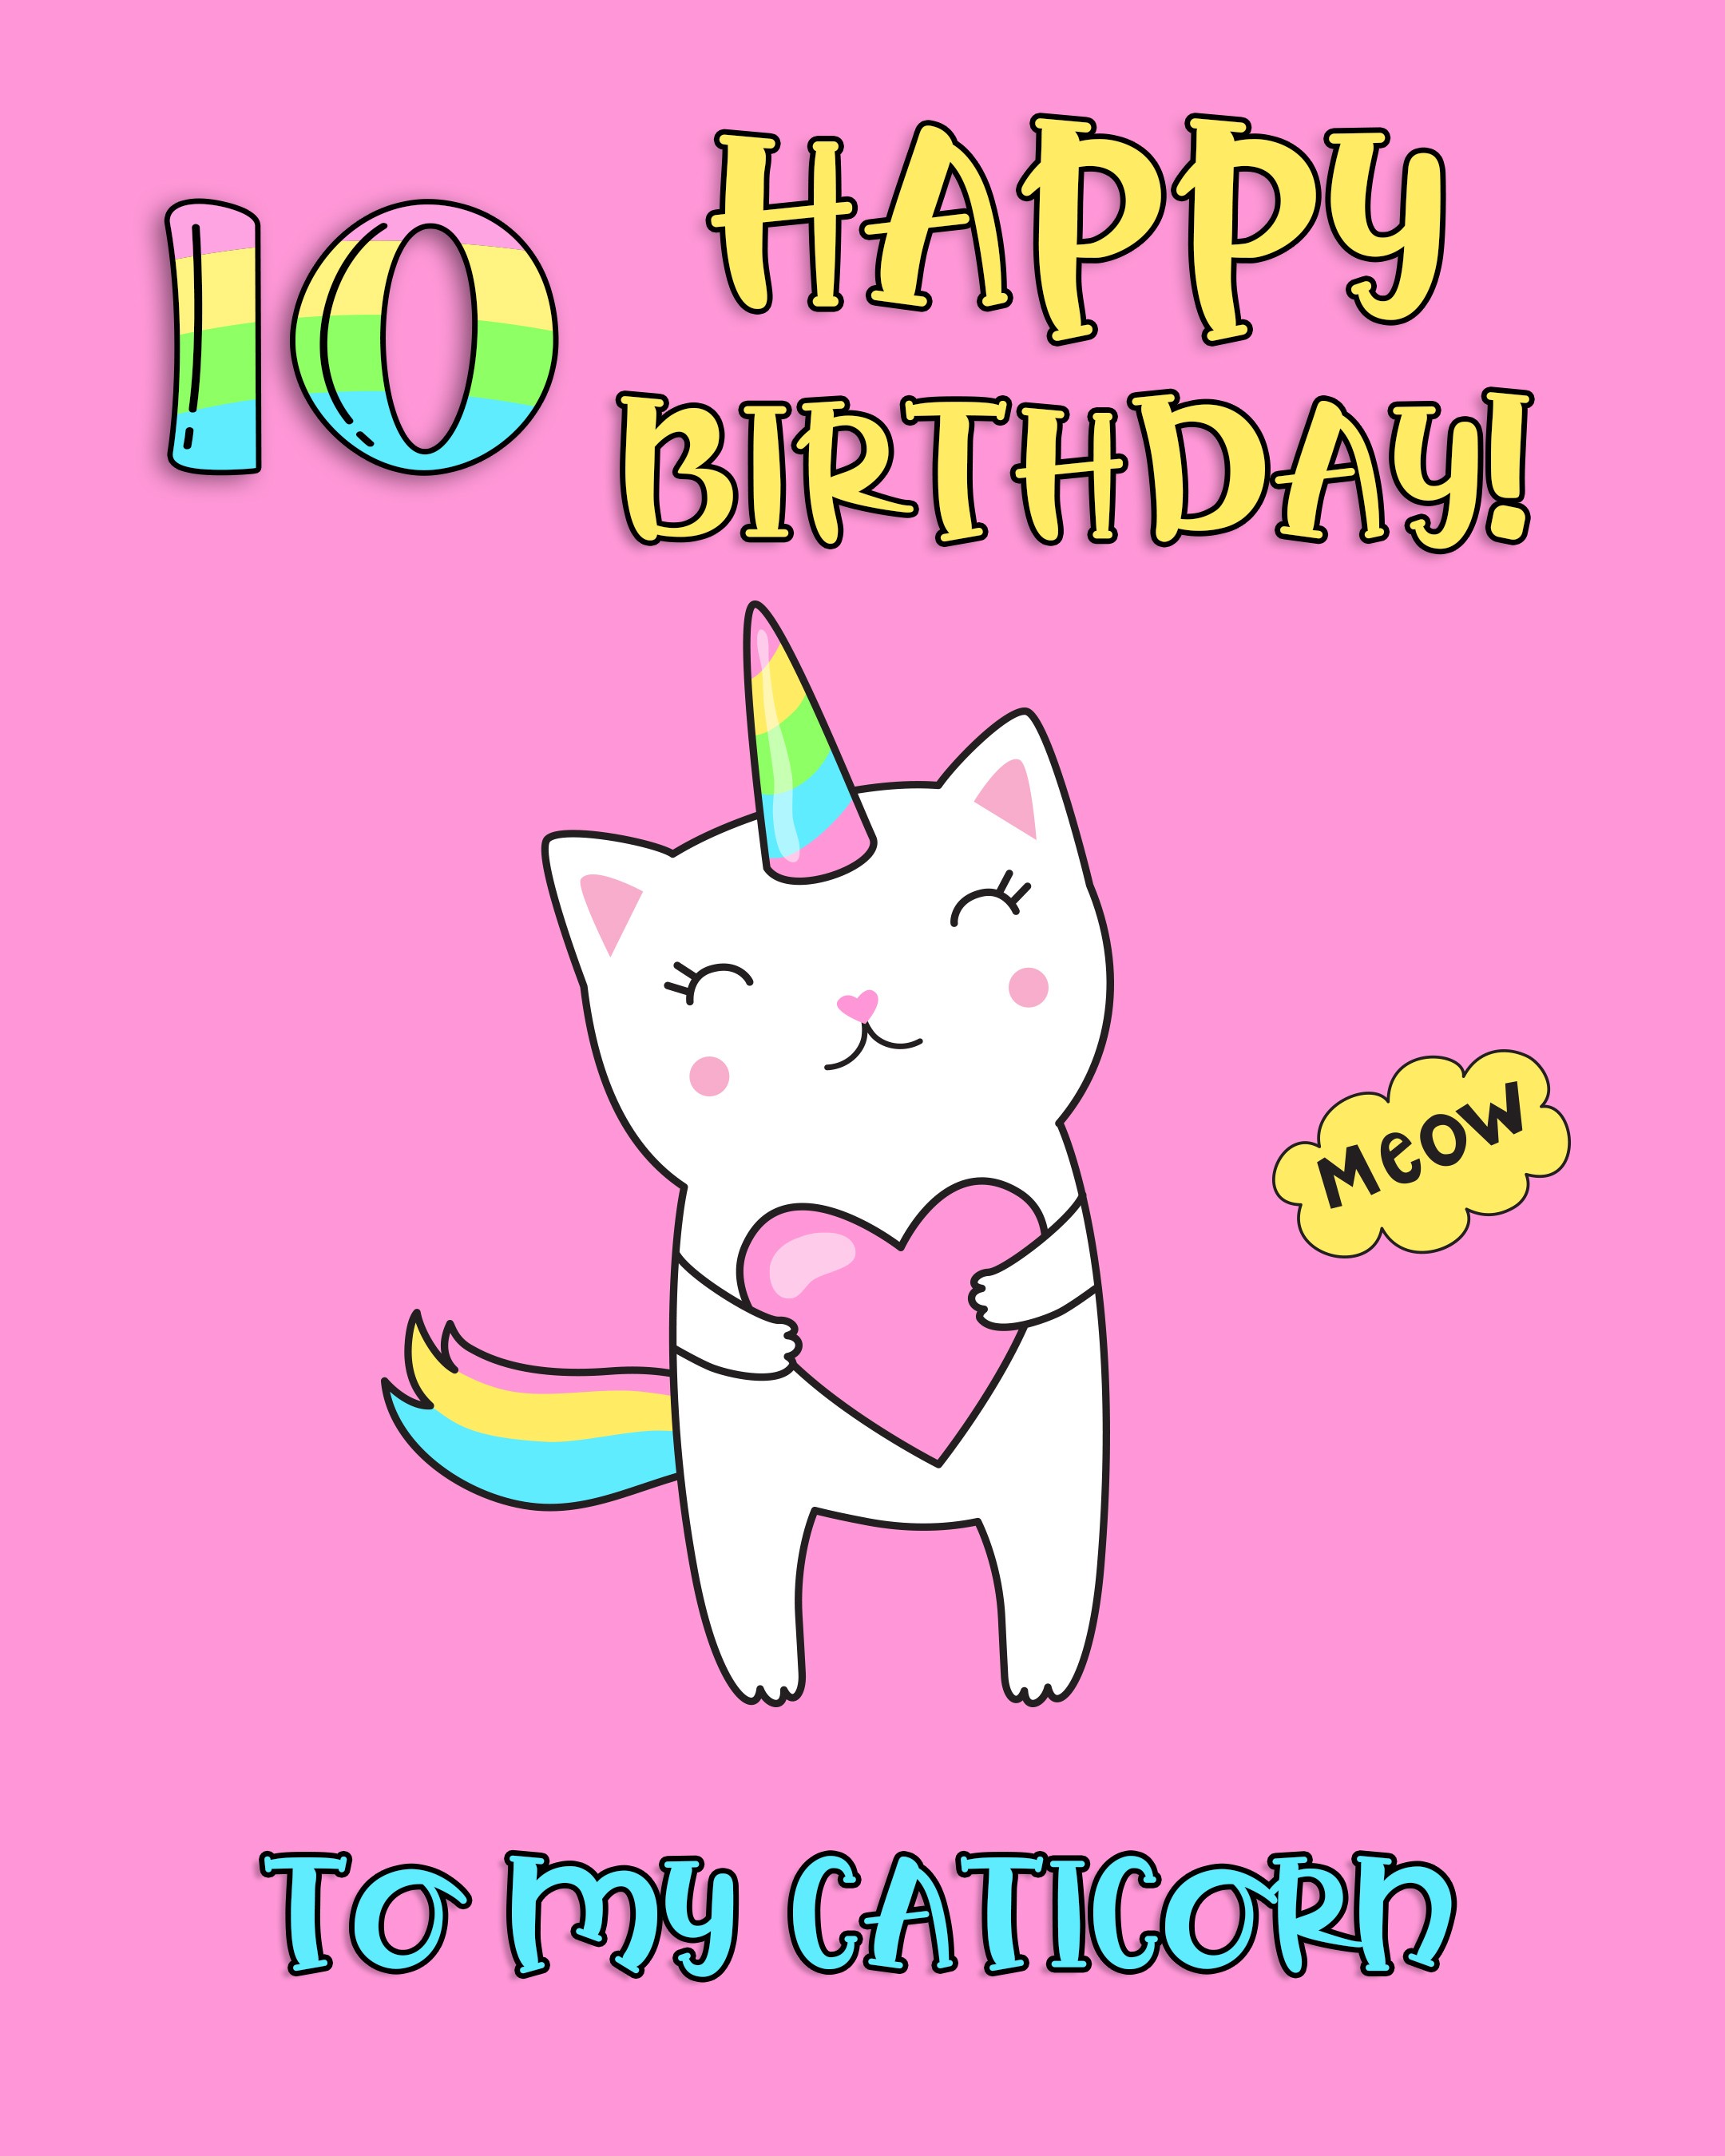 Free Funny 10th Years Happy Birthday Image - birthdayimg.com